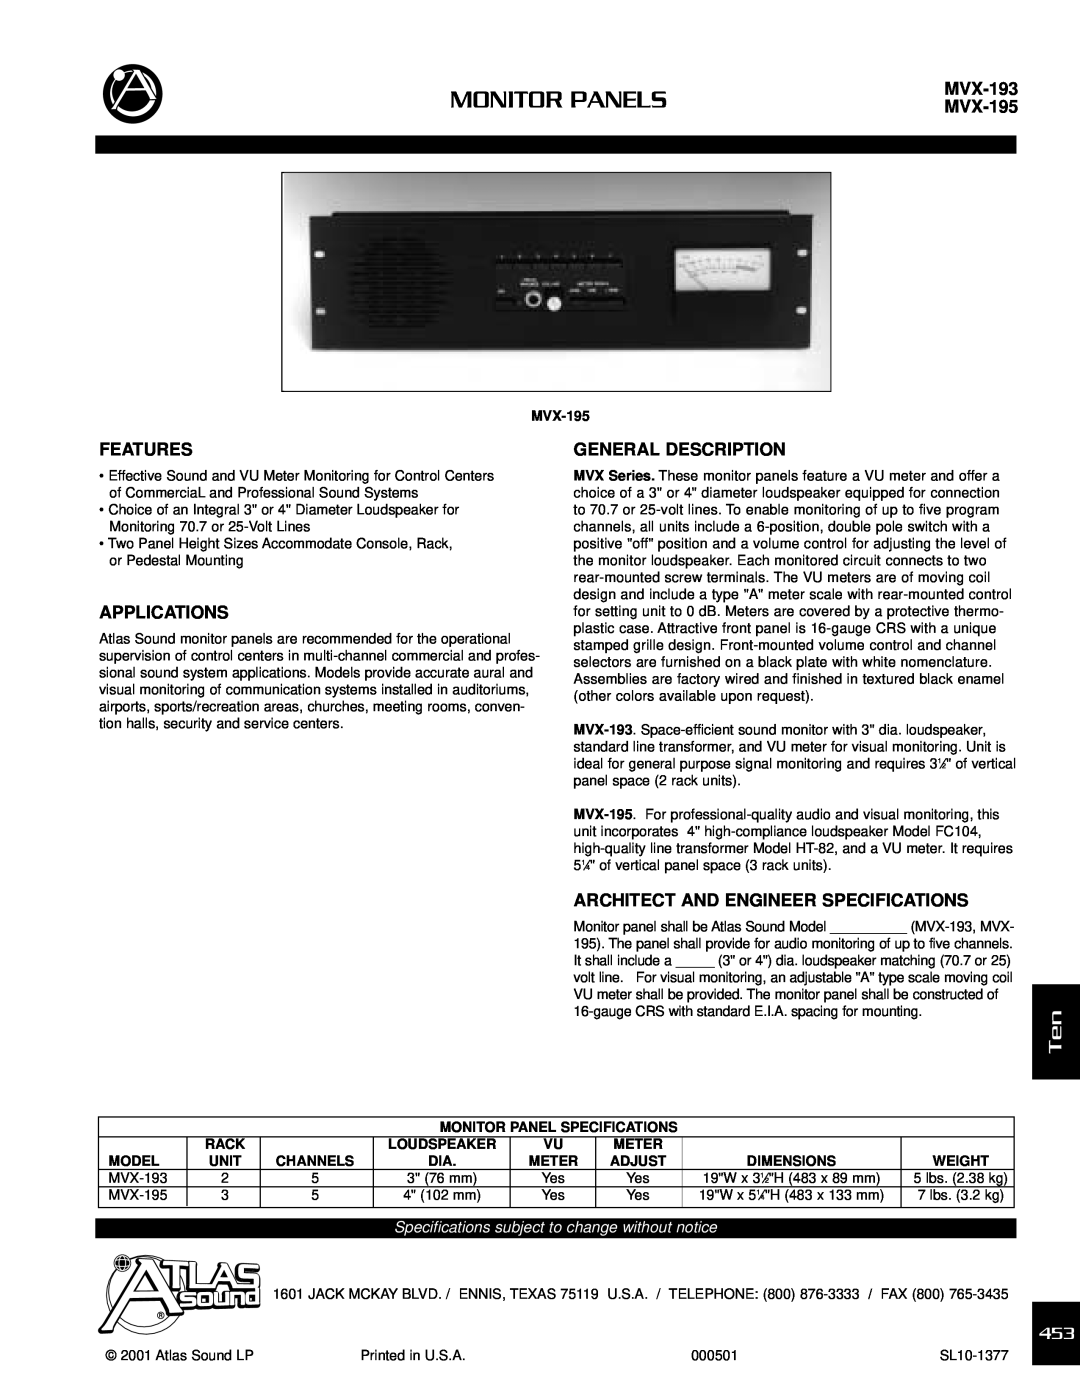 Atlas Sound installation instructions Installation Instructions, MVX-193, MVX-195 MONITOR PANELS 